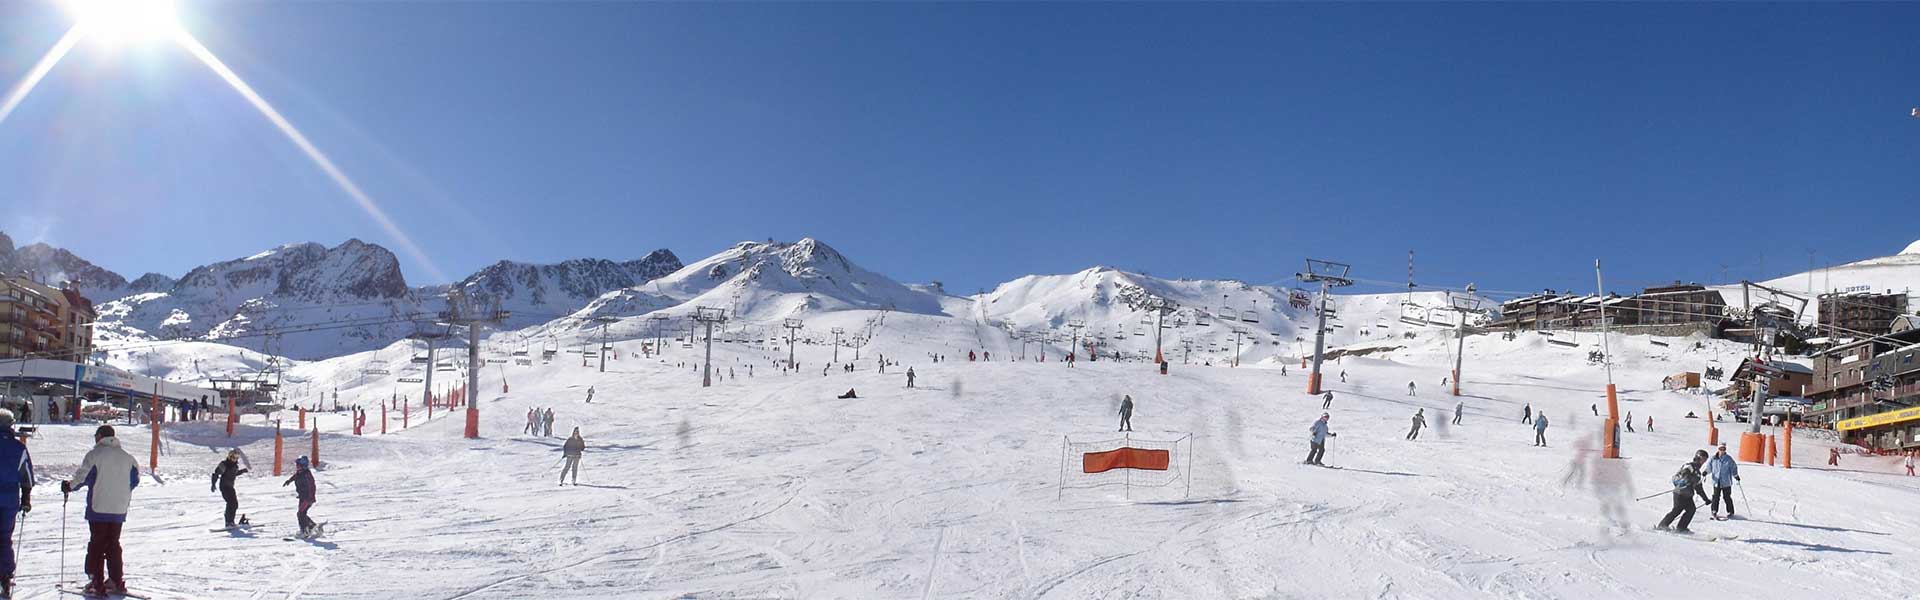 School Ski trip to Andorra